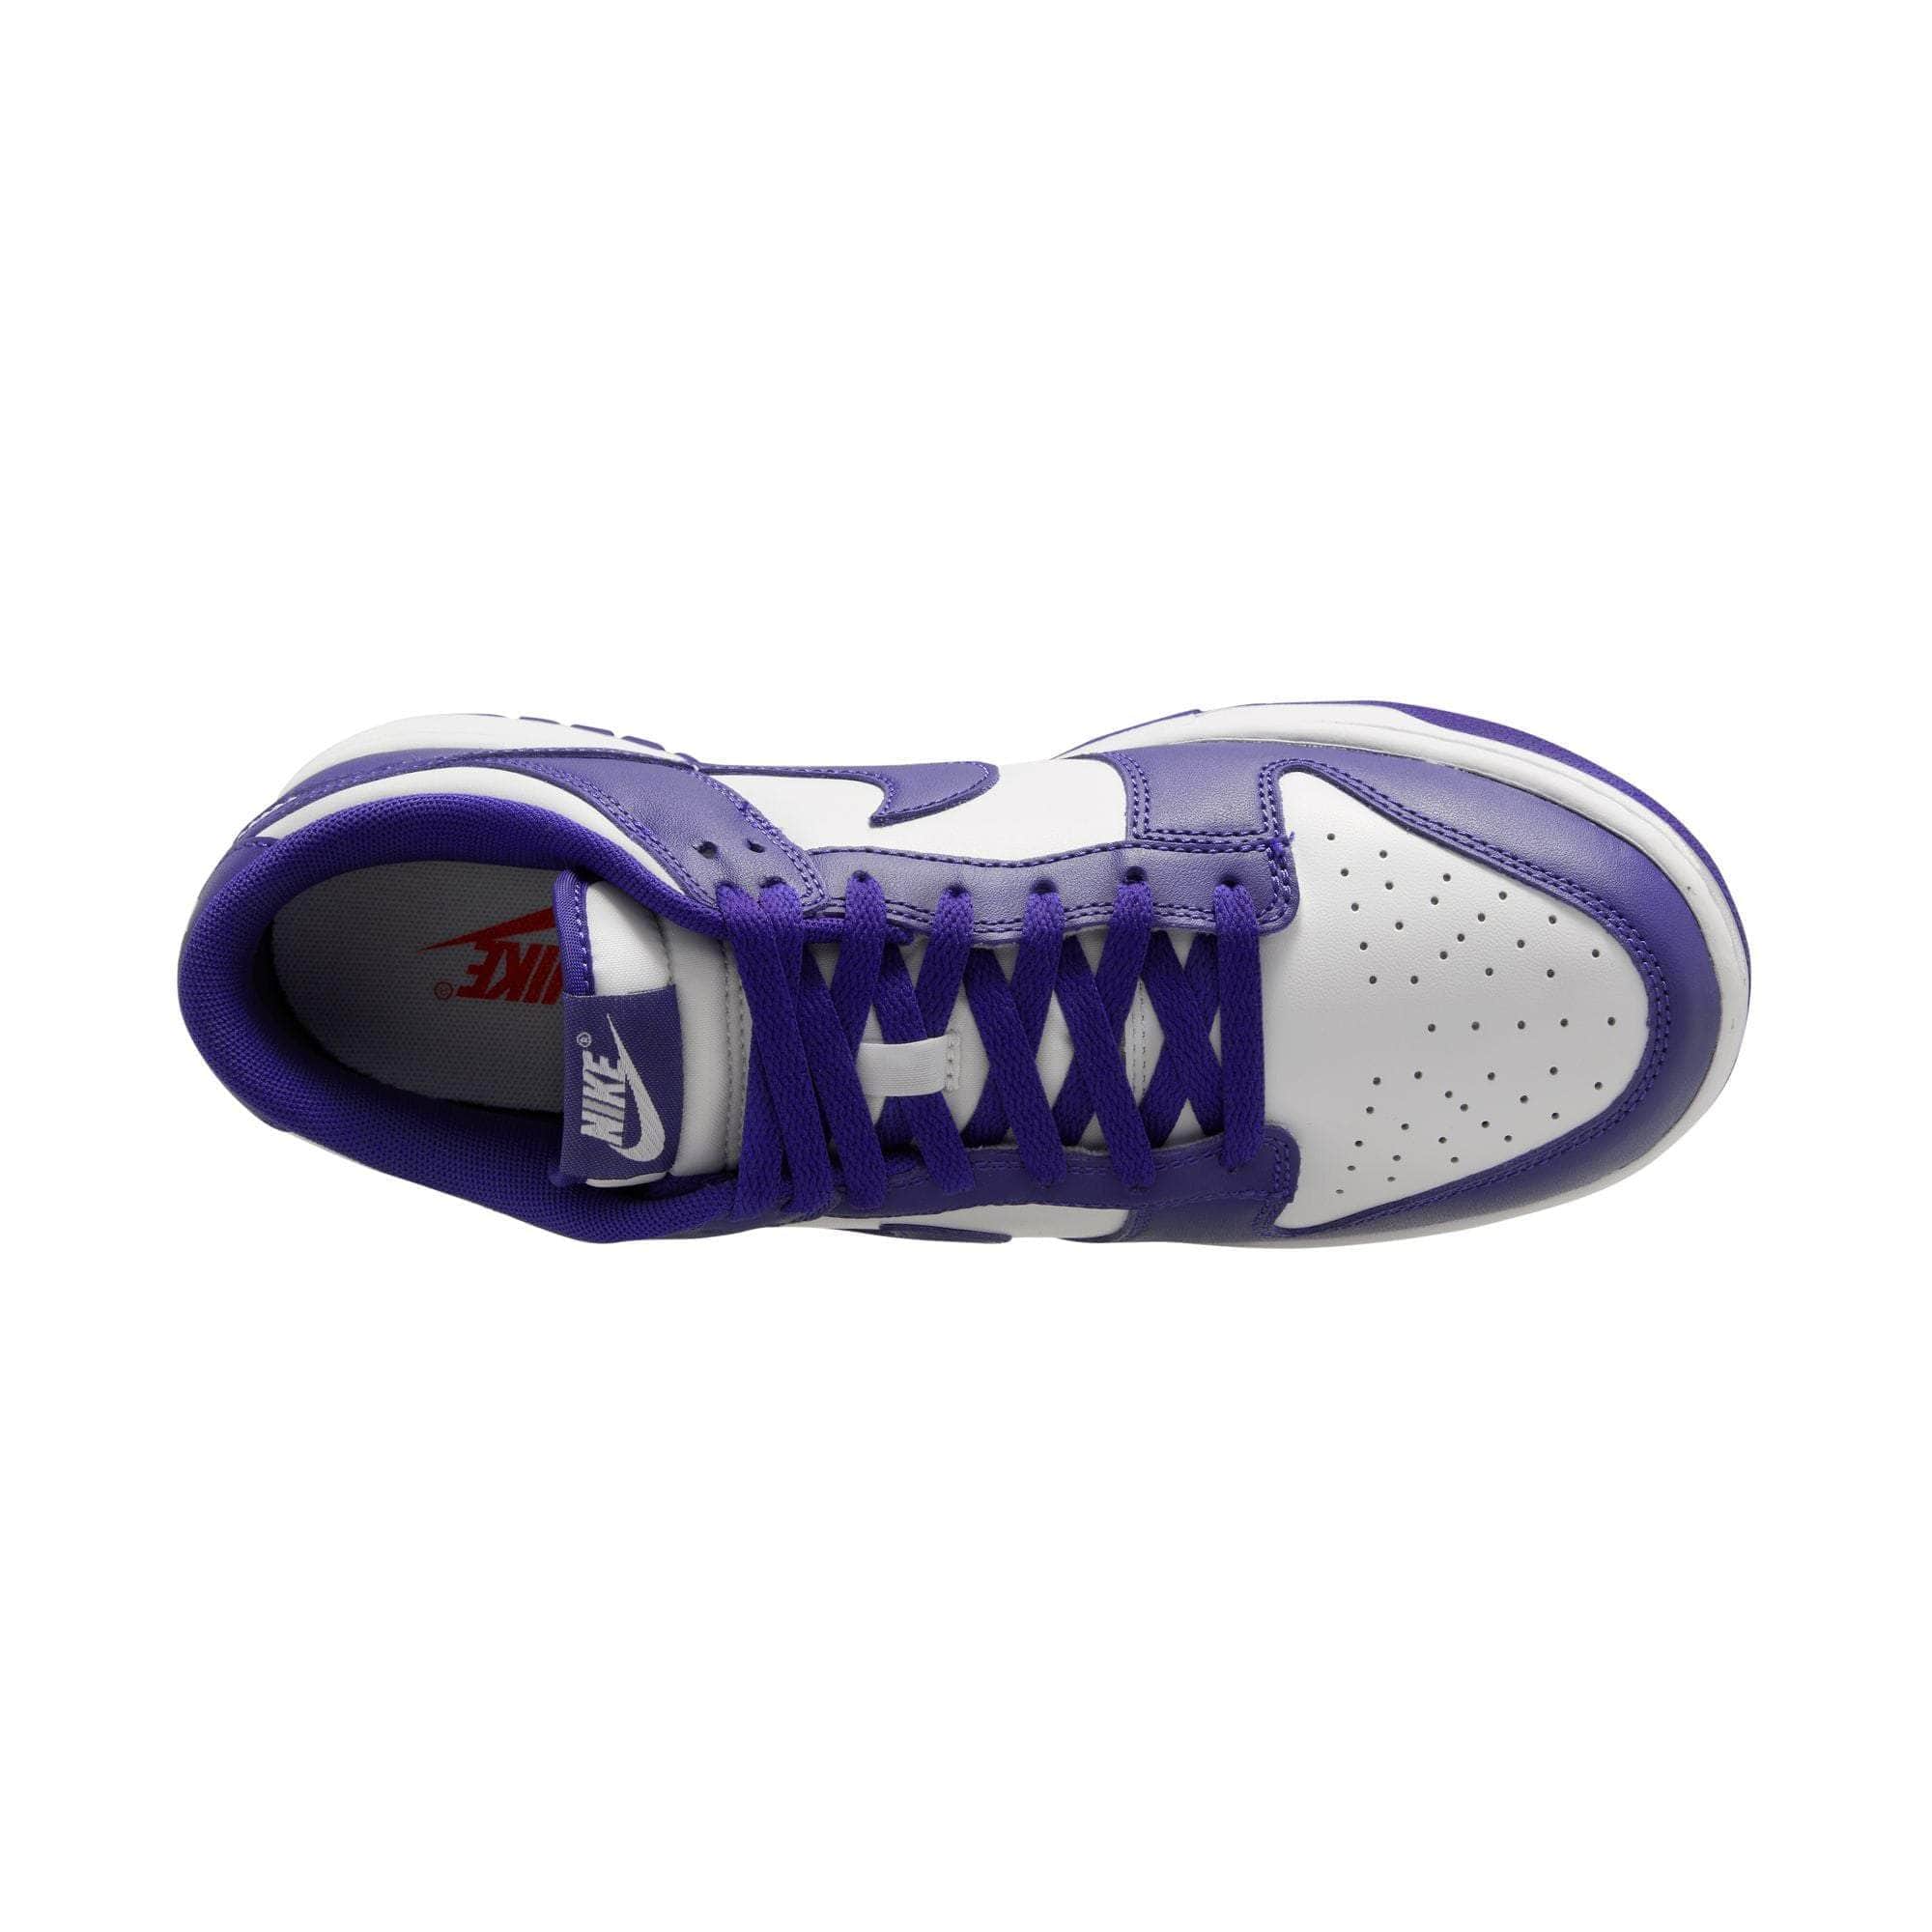 Nike Footwear Nike Dunk Low "Concord" - Men's